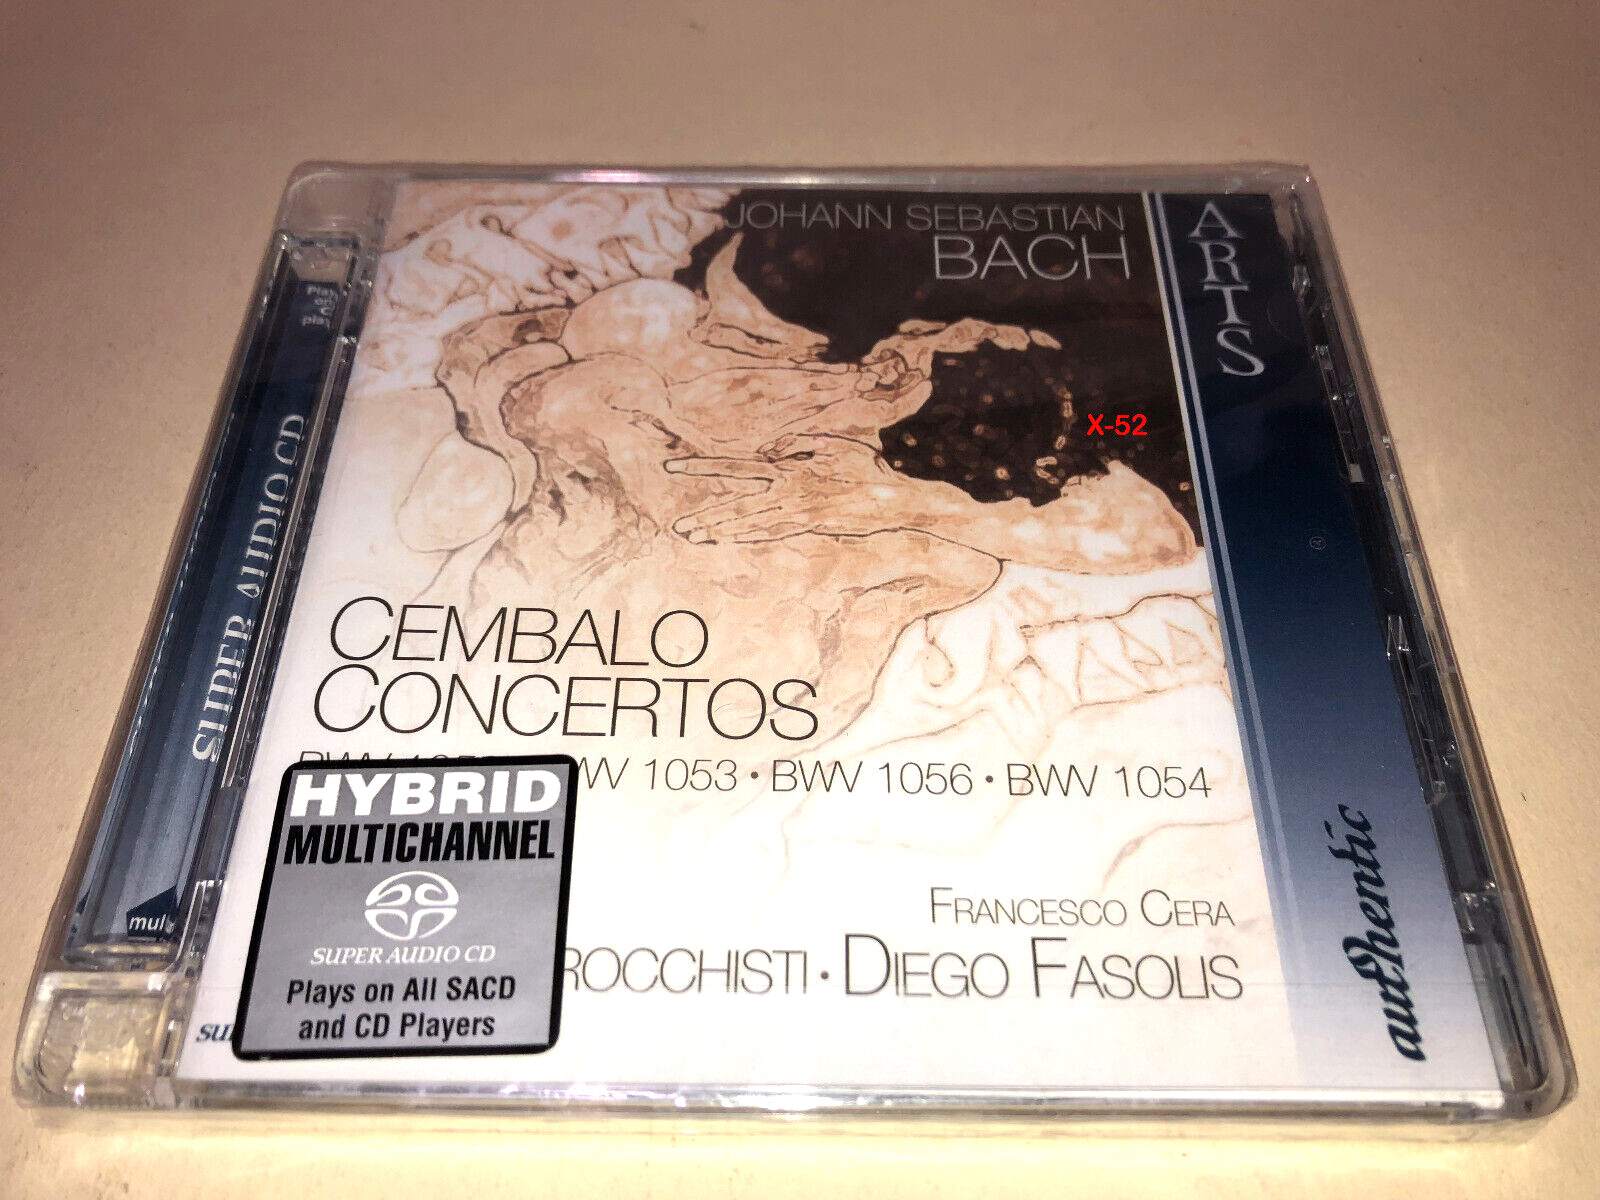 Bach CD Hybrid SACD Cembalo Concertos Francesco Cera I Barocchisi Diego Fasolis